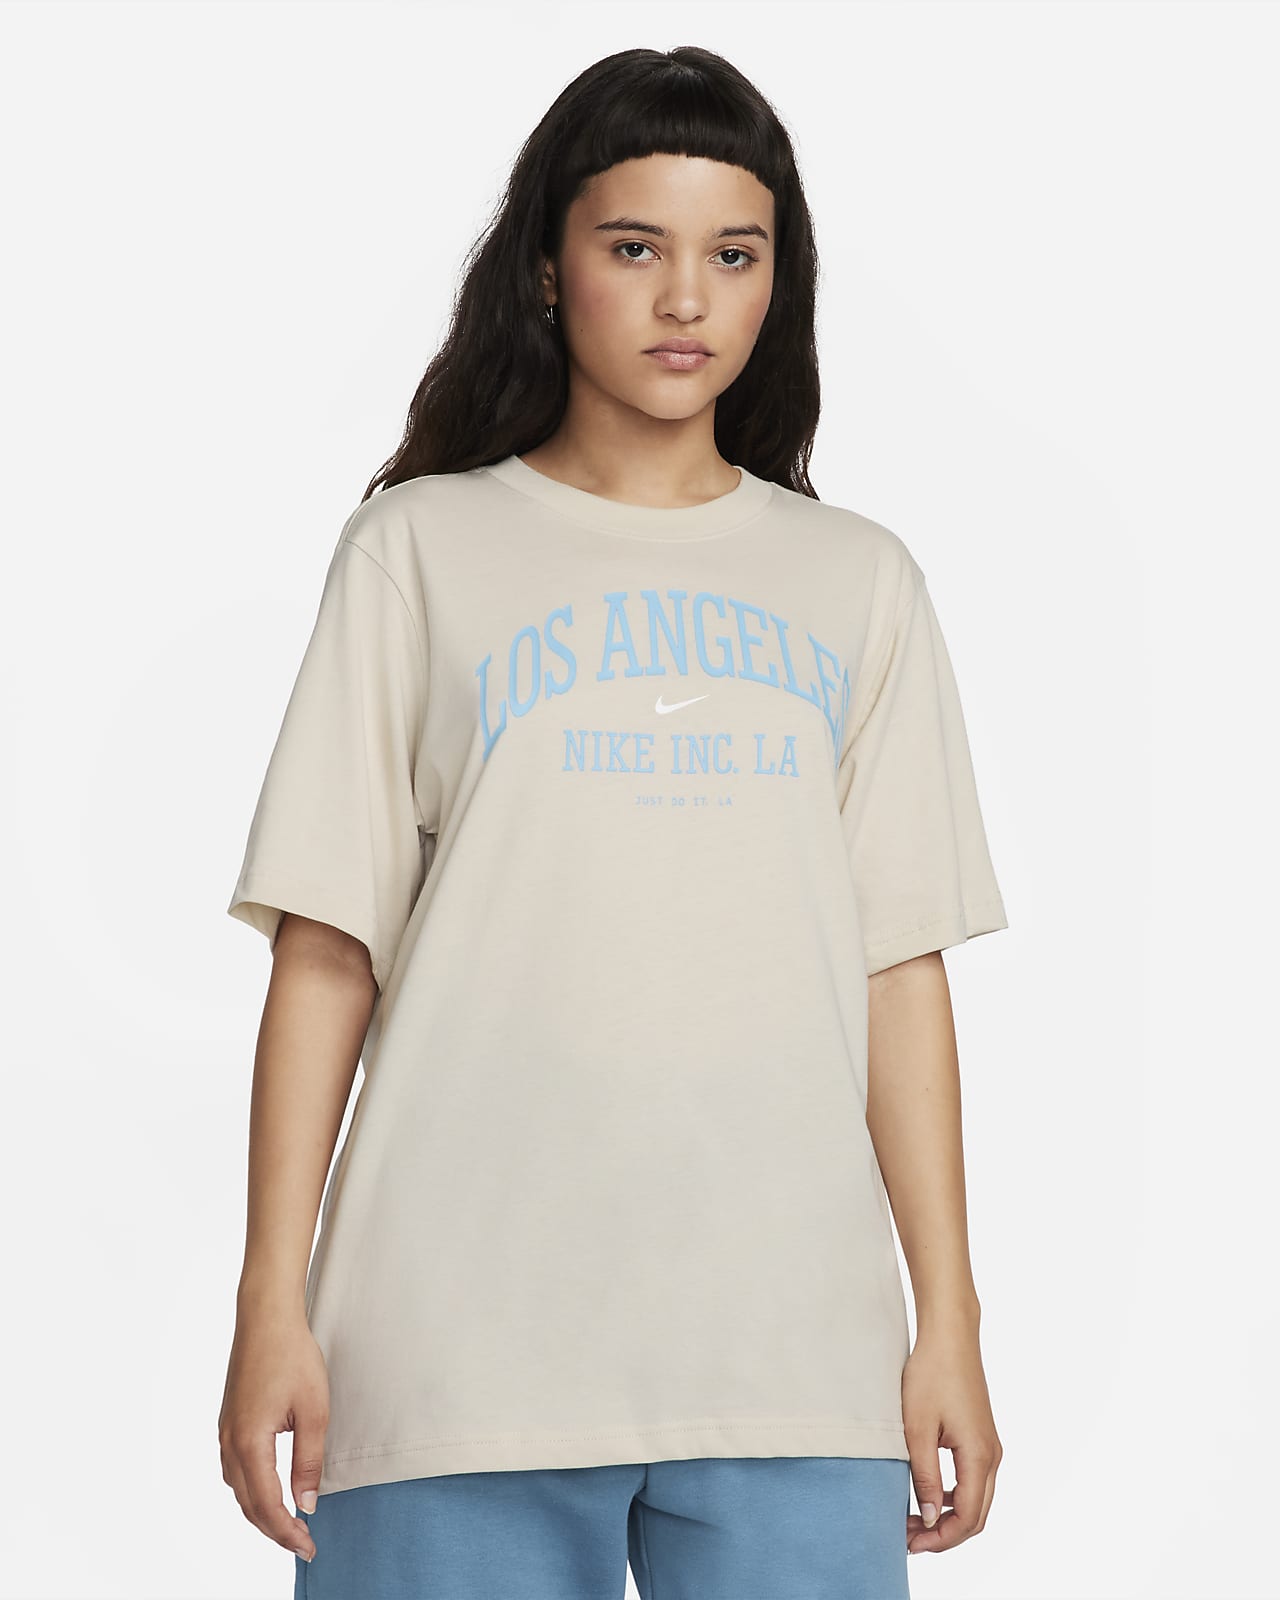 Zara - Washed T-Shirt Girls - Anthracite Grey - Women